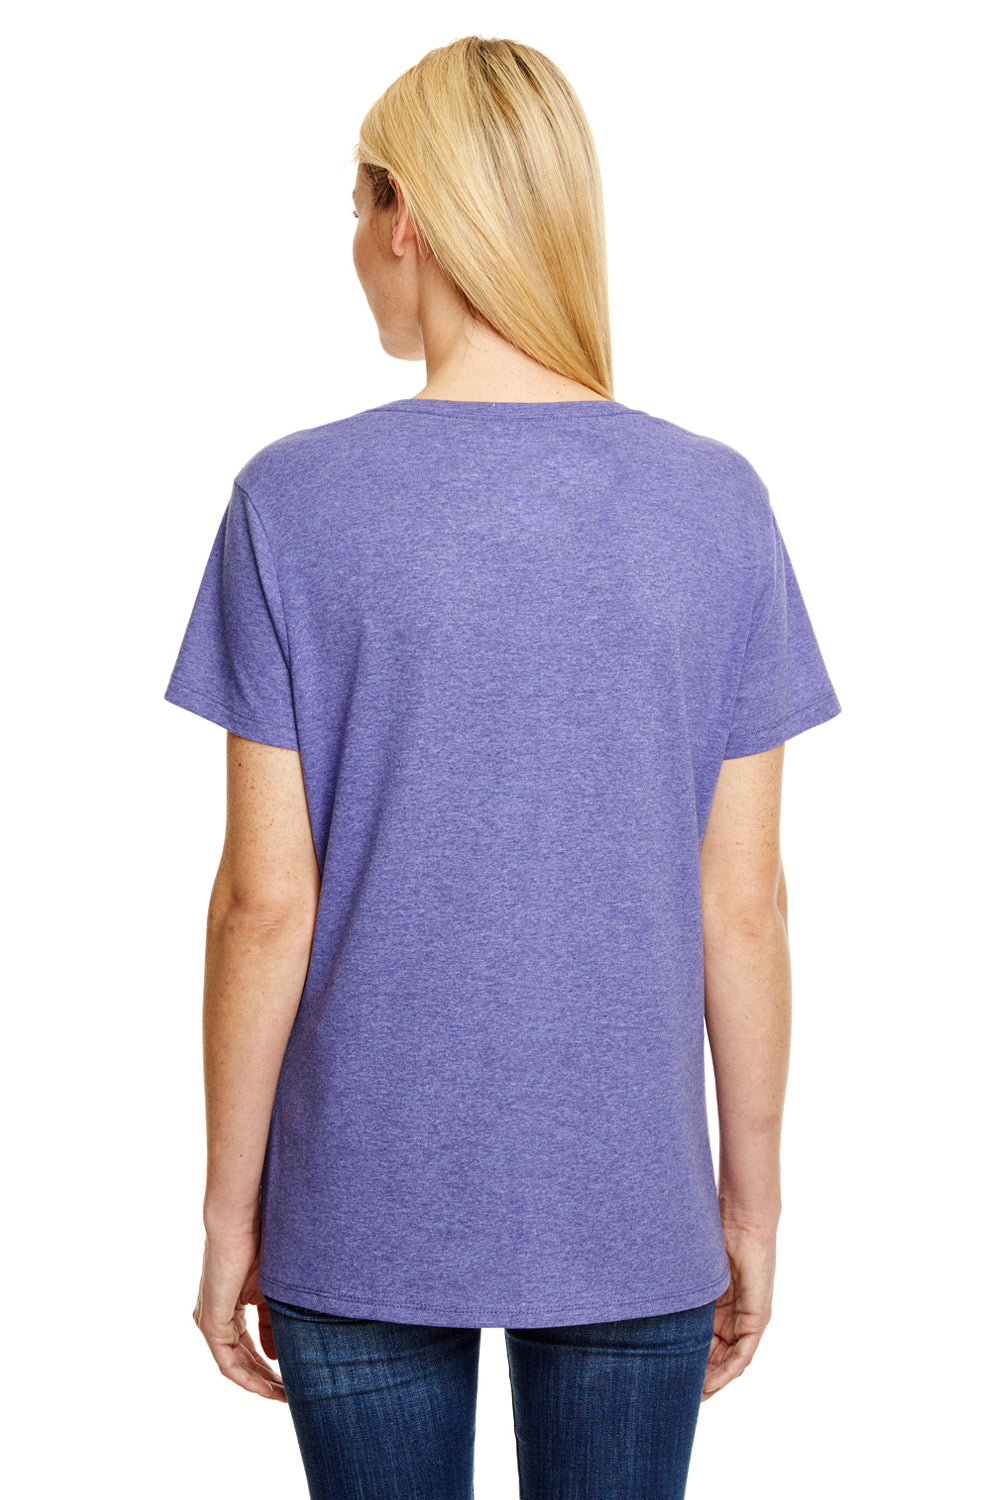 Hanes 42VT Womens X-Temp FreshIQ Moisture Wicking Short Sleeve V-Neck T-Shirt Grape Purple Back